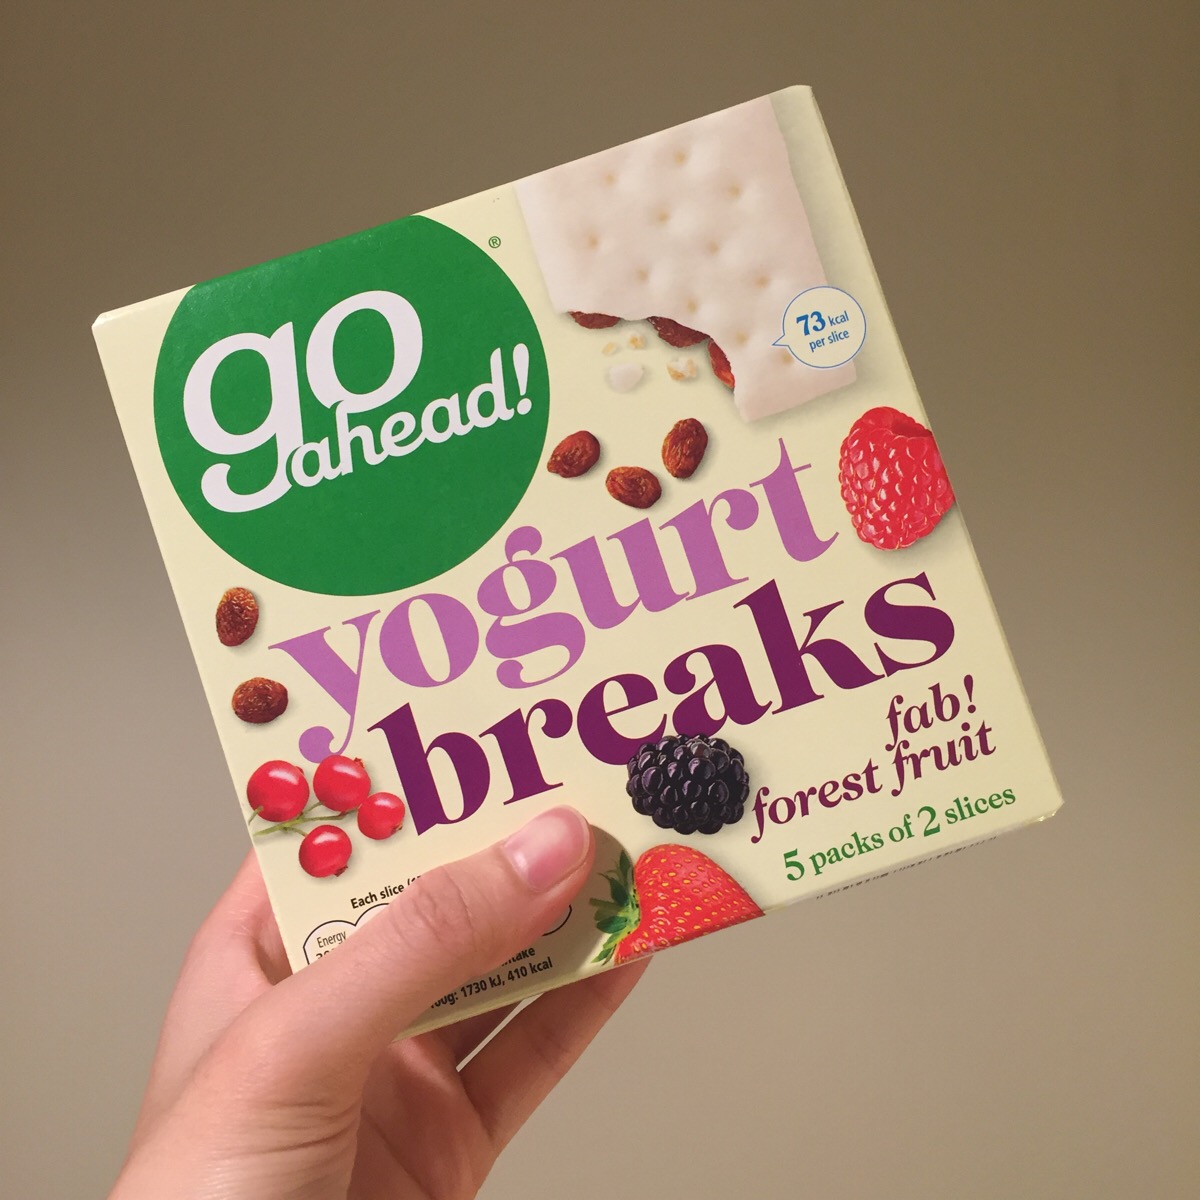 go ahead yogurt breaks